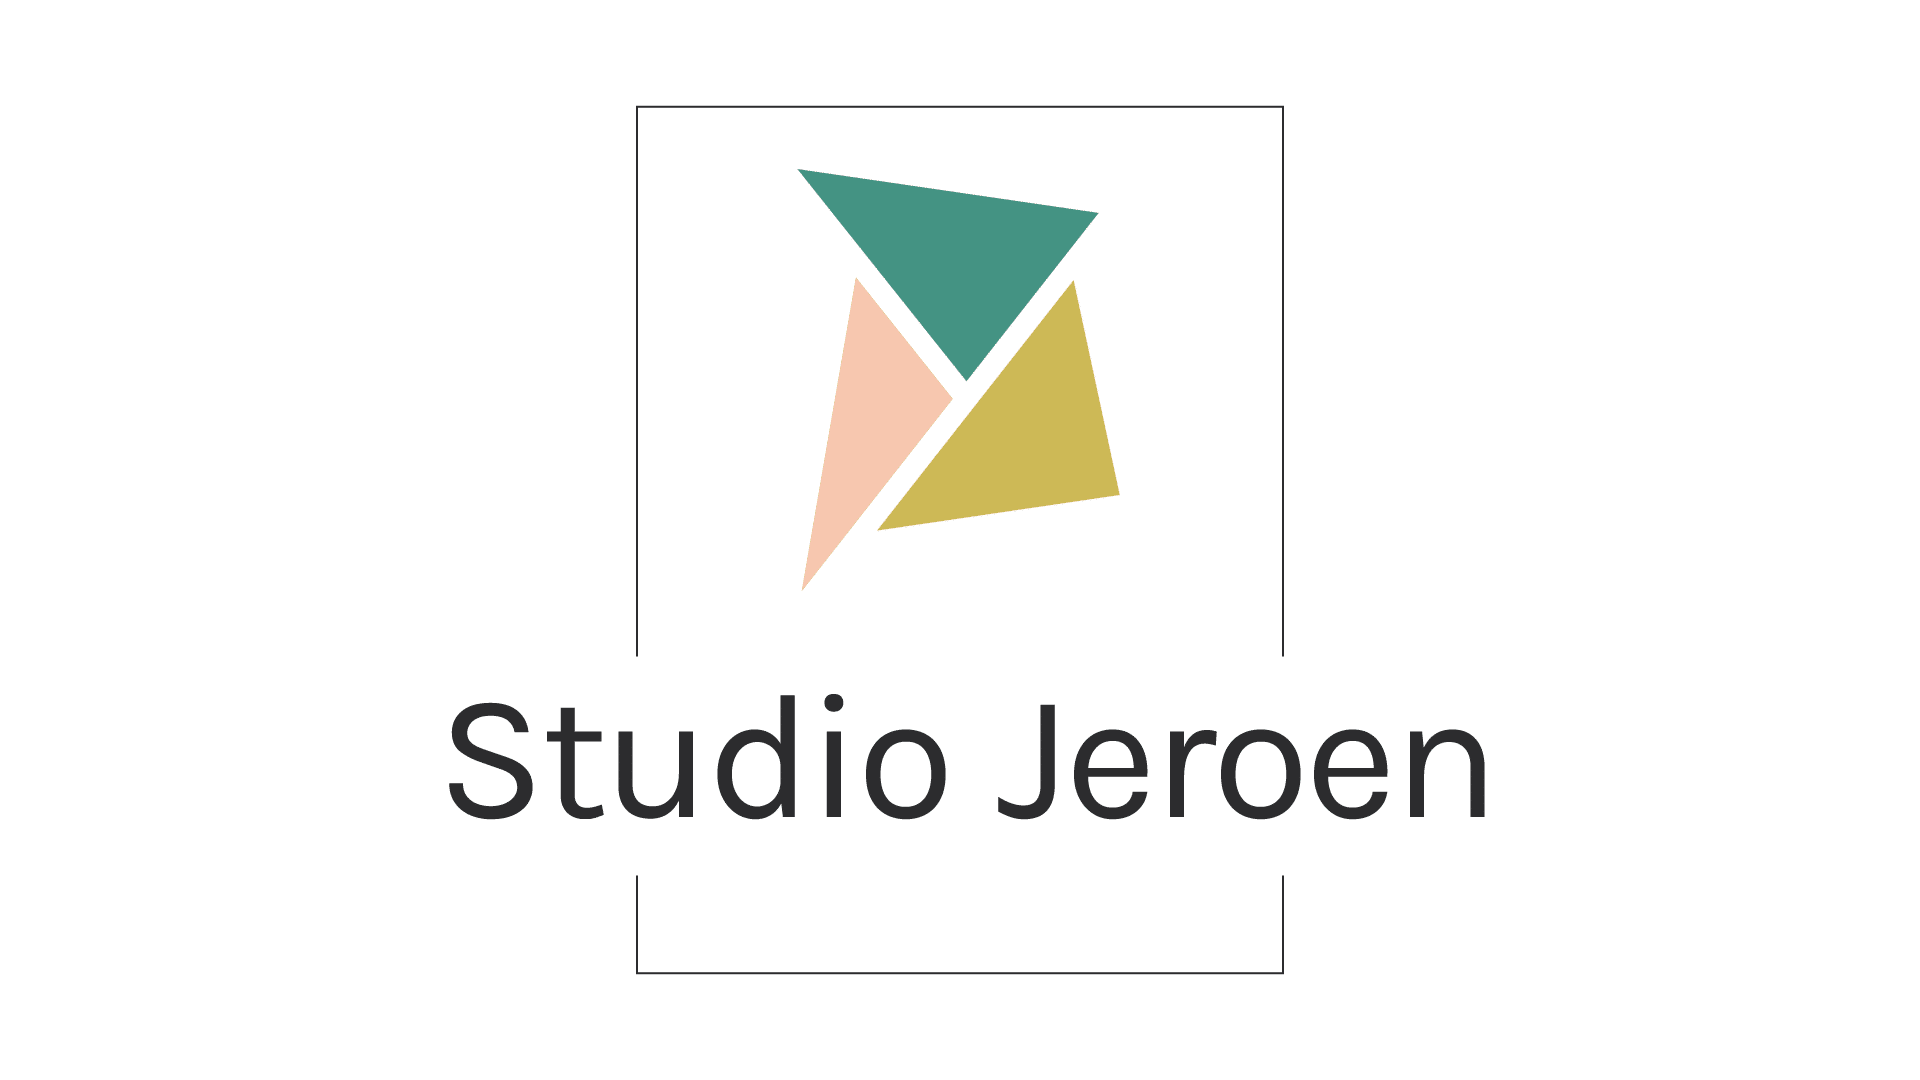 Studio Jeroen logo